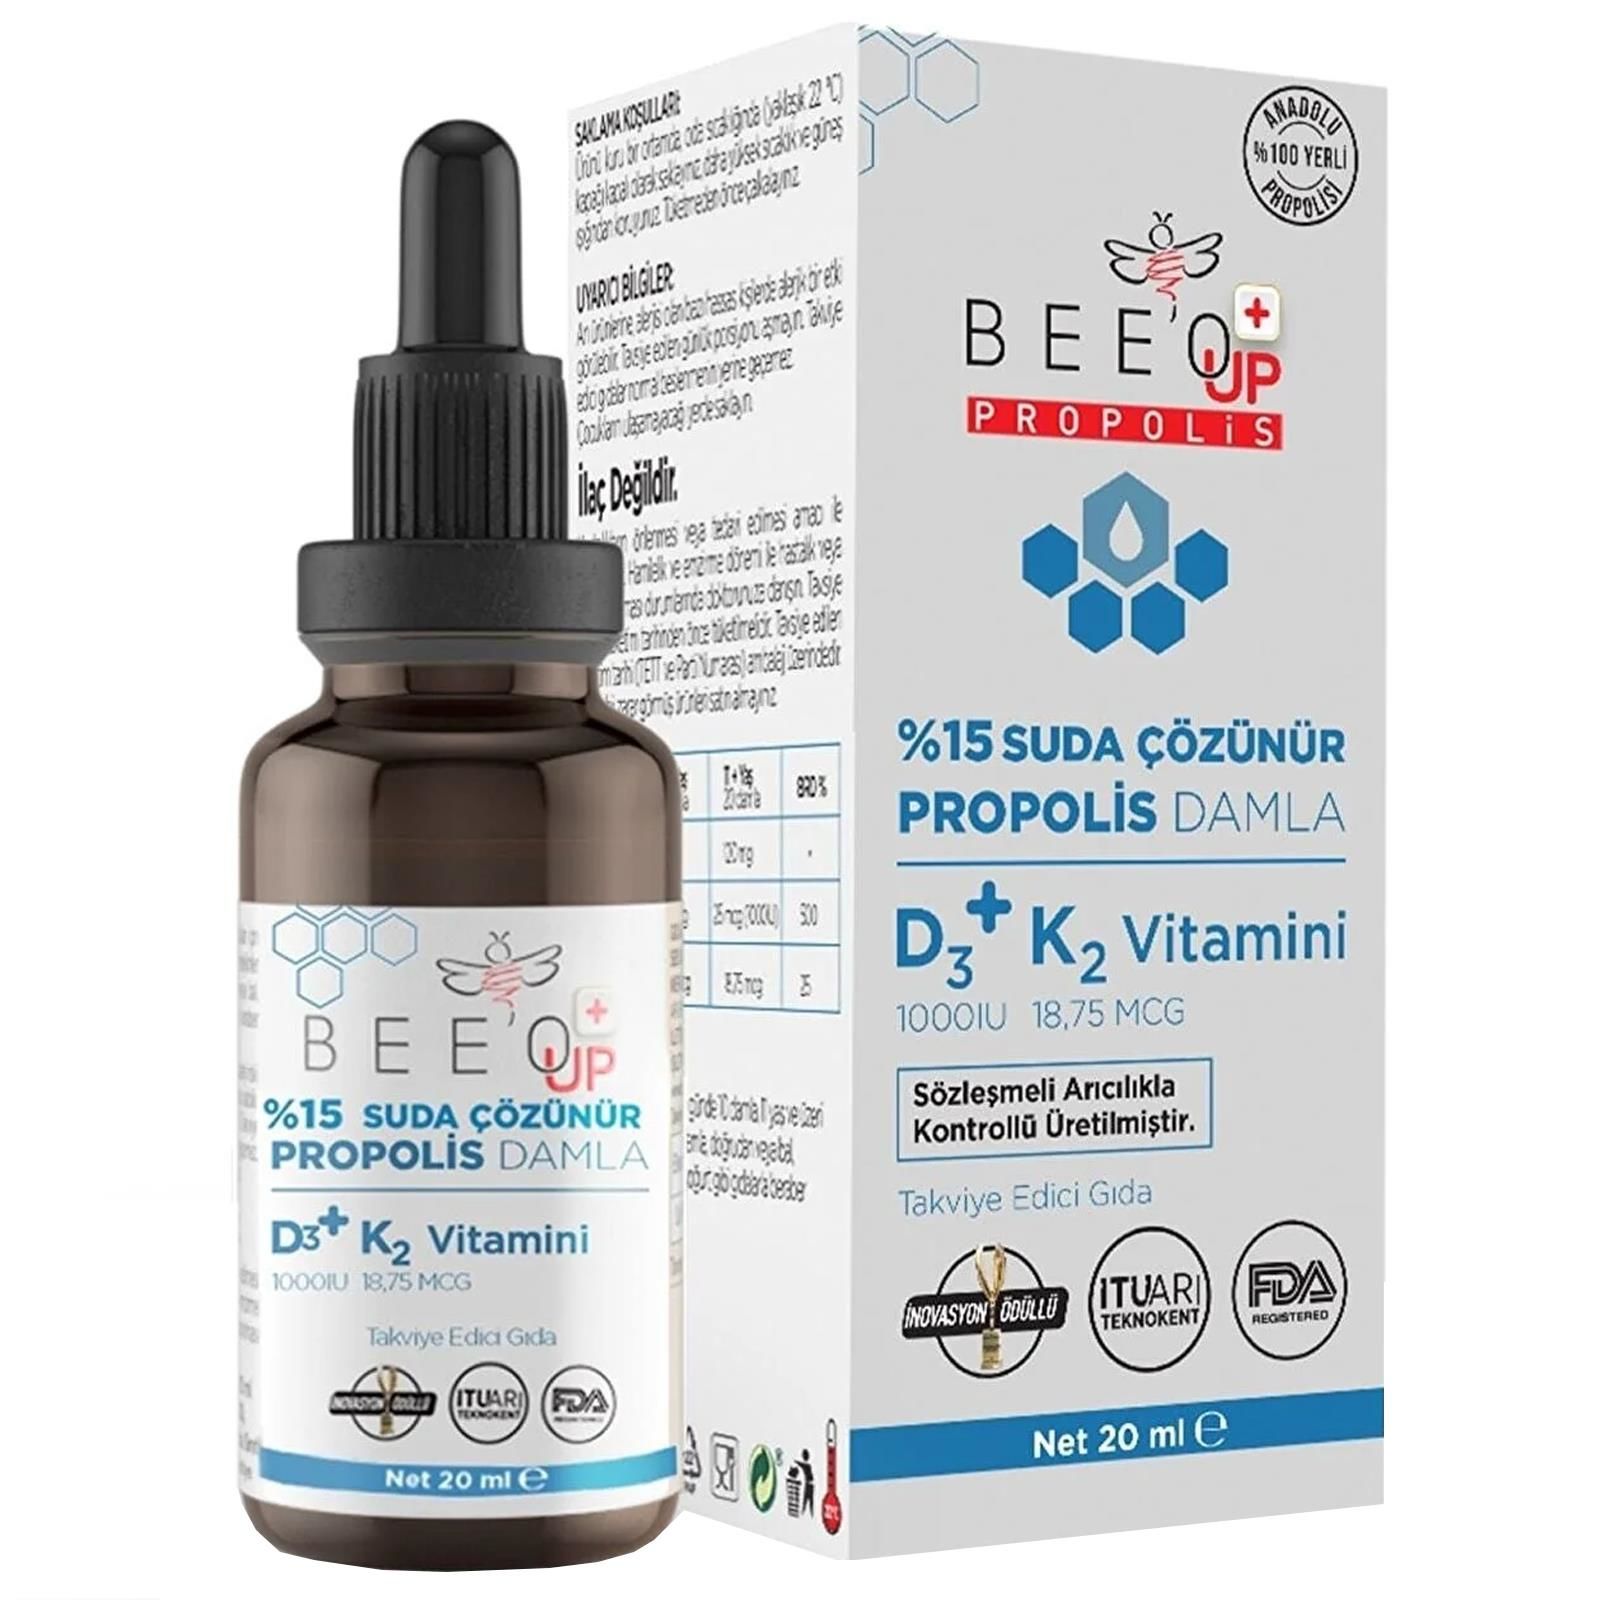 Beeo Up %15 Suda Çözünür Propolis Damla + D3 K2 Vitamini 20 ml